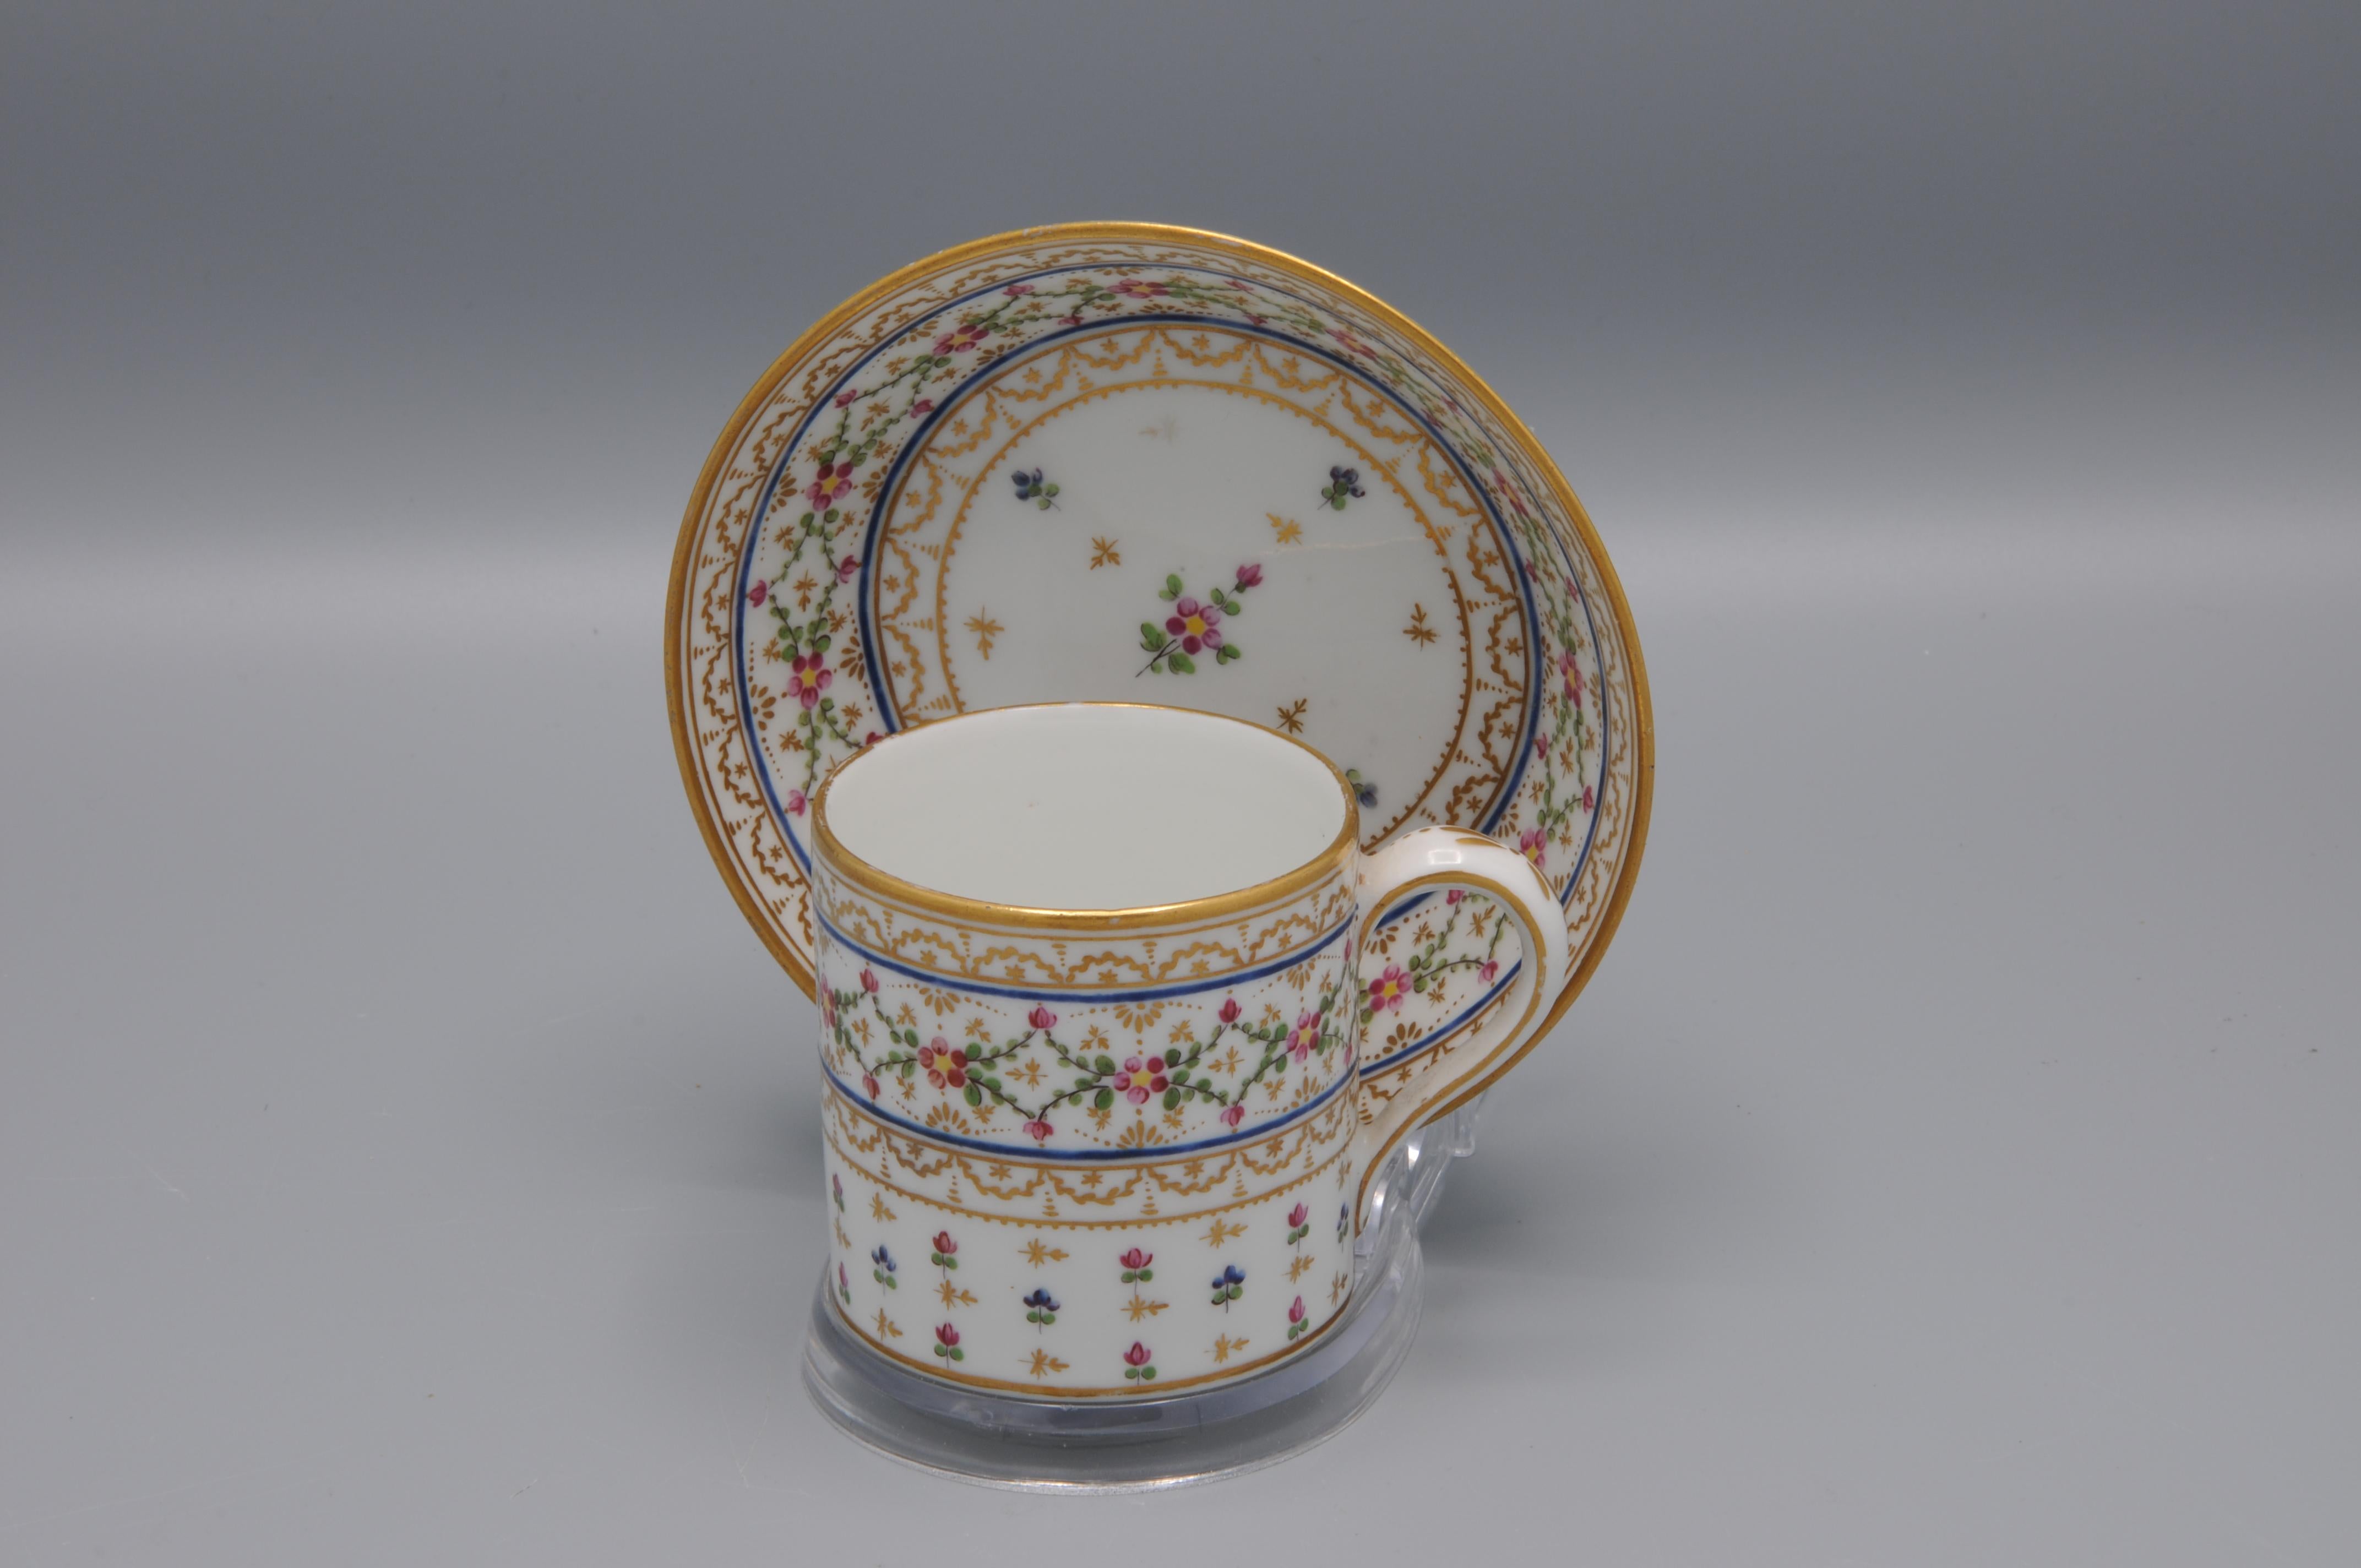 Louis XVI André Leboeuf, Manufacture à la Reine' - Cup and saucer 'Litron', late 18th For Sale